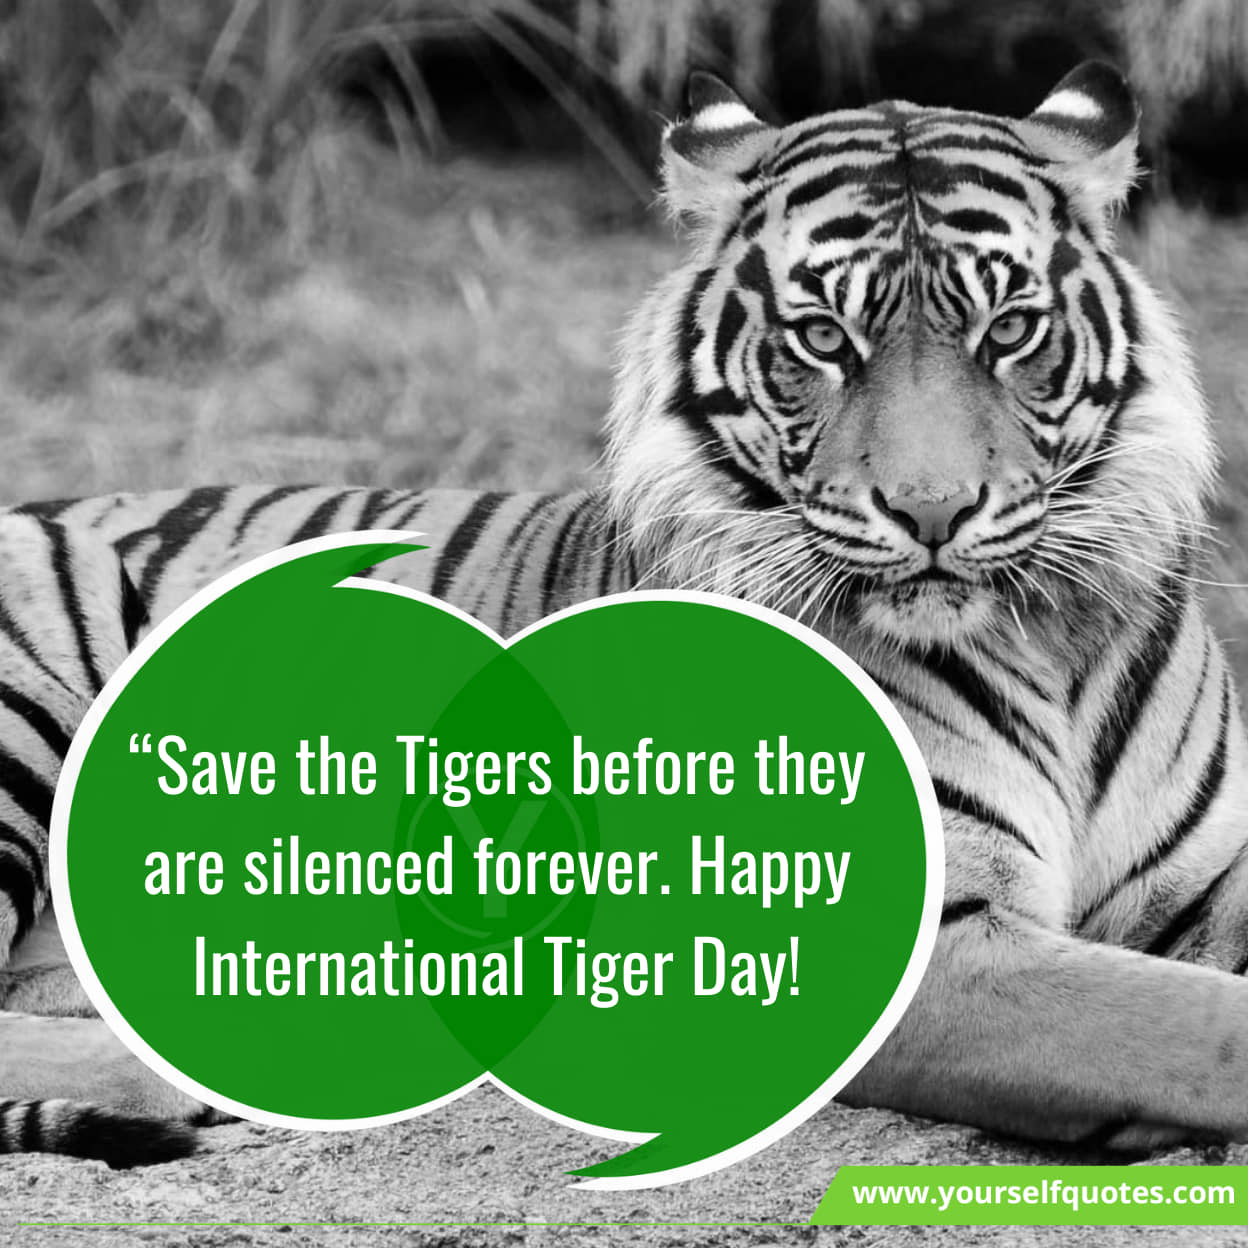 International Tiger Day Wishes